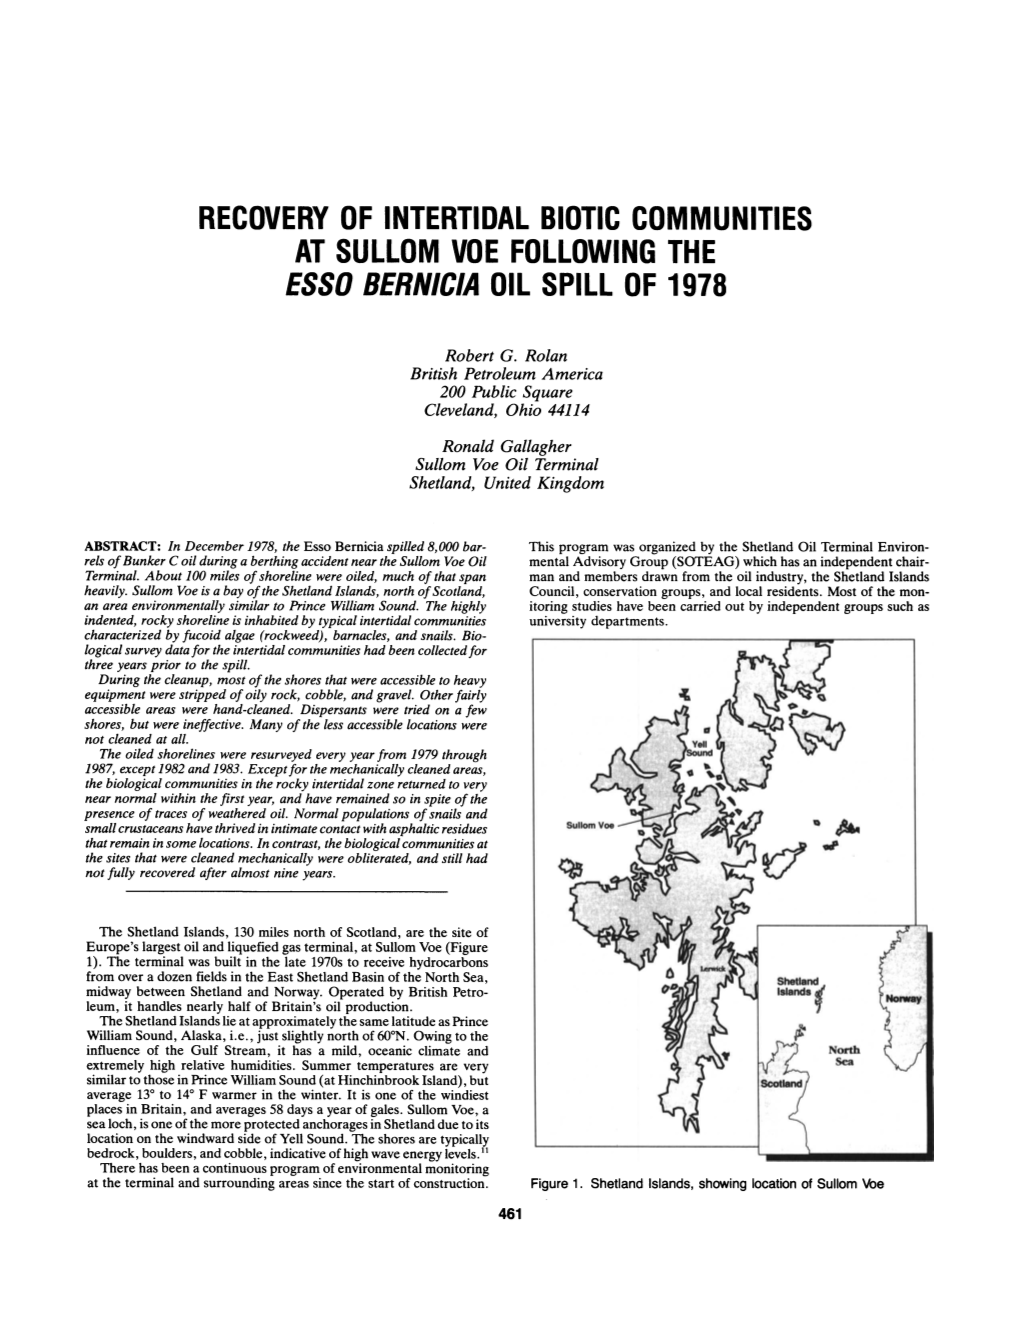 Recovery of Intertidal Biotic Communities at Sullom Voe